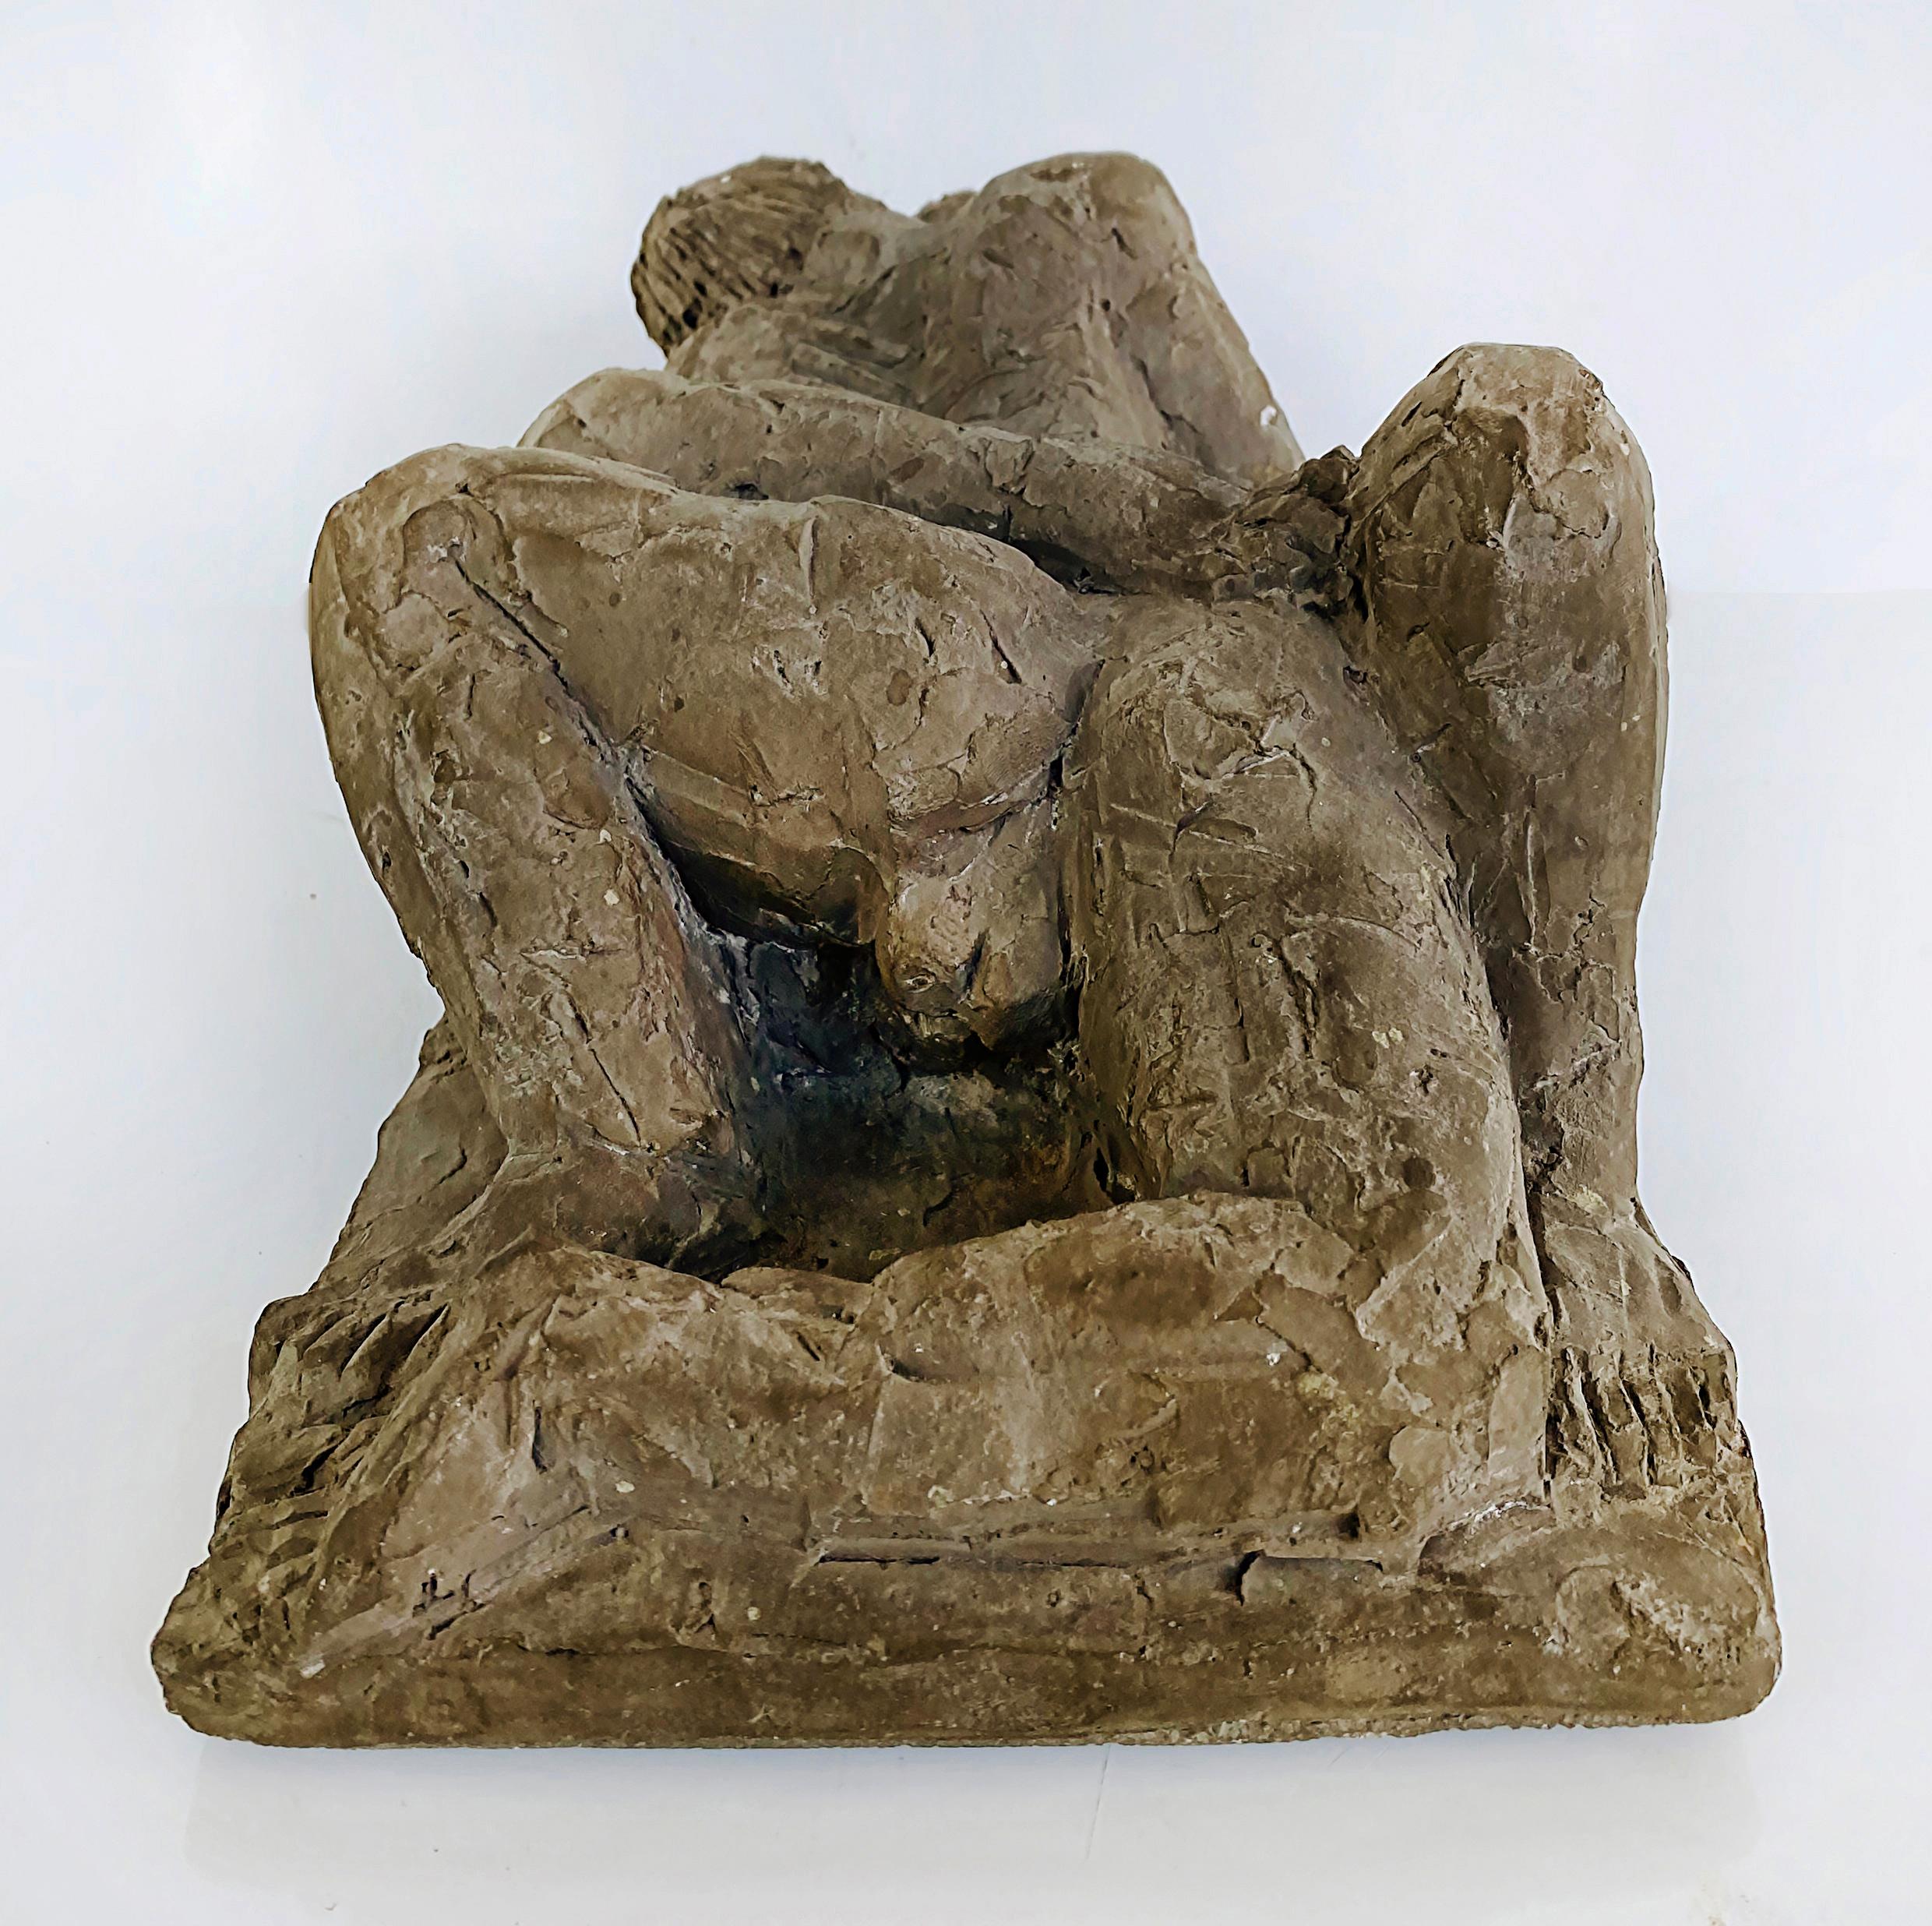  Original Chuck Dodson Erotic Figurative Sculpture circa 1975, 